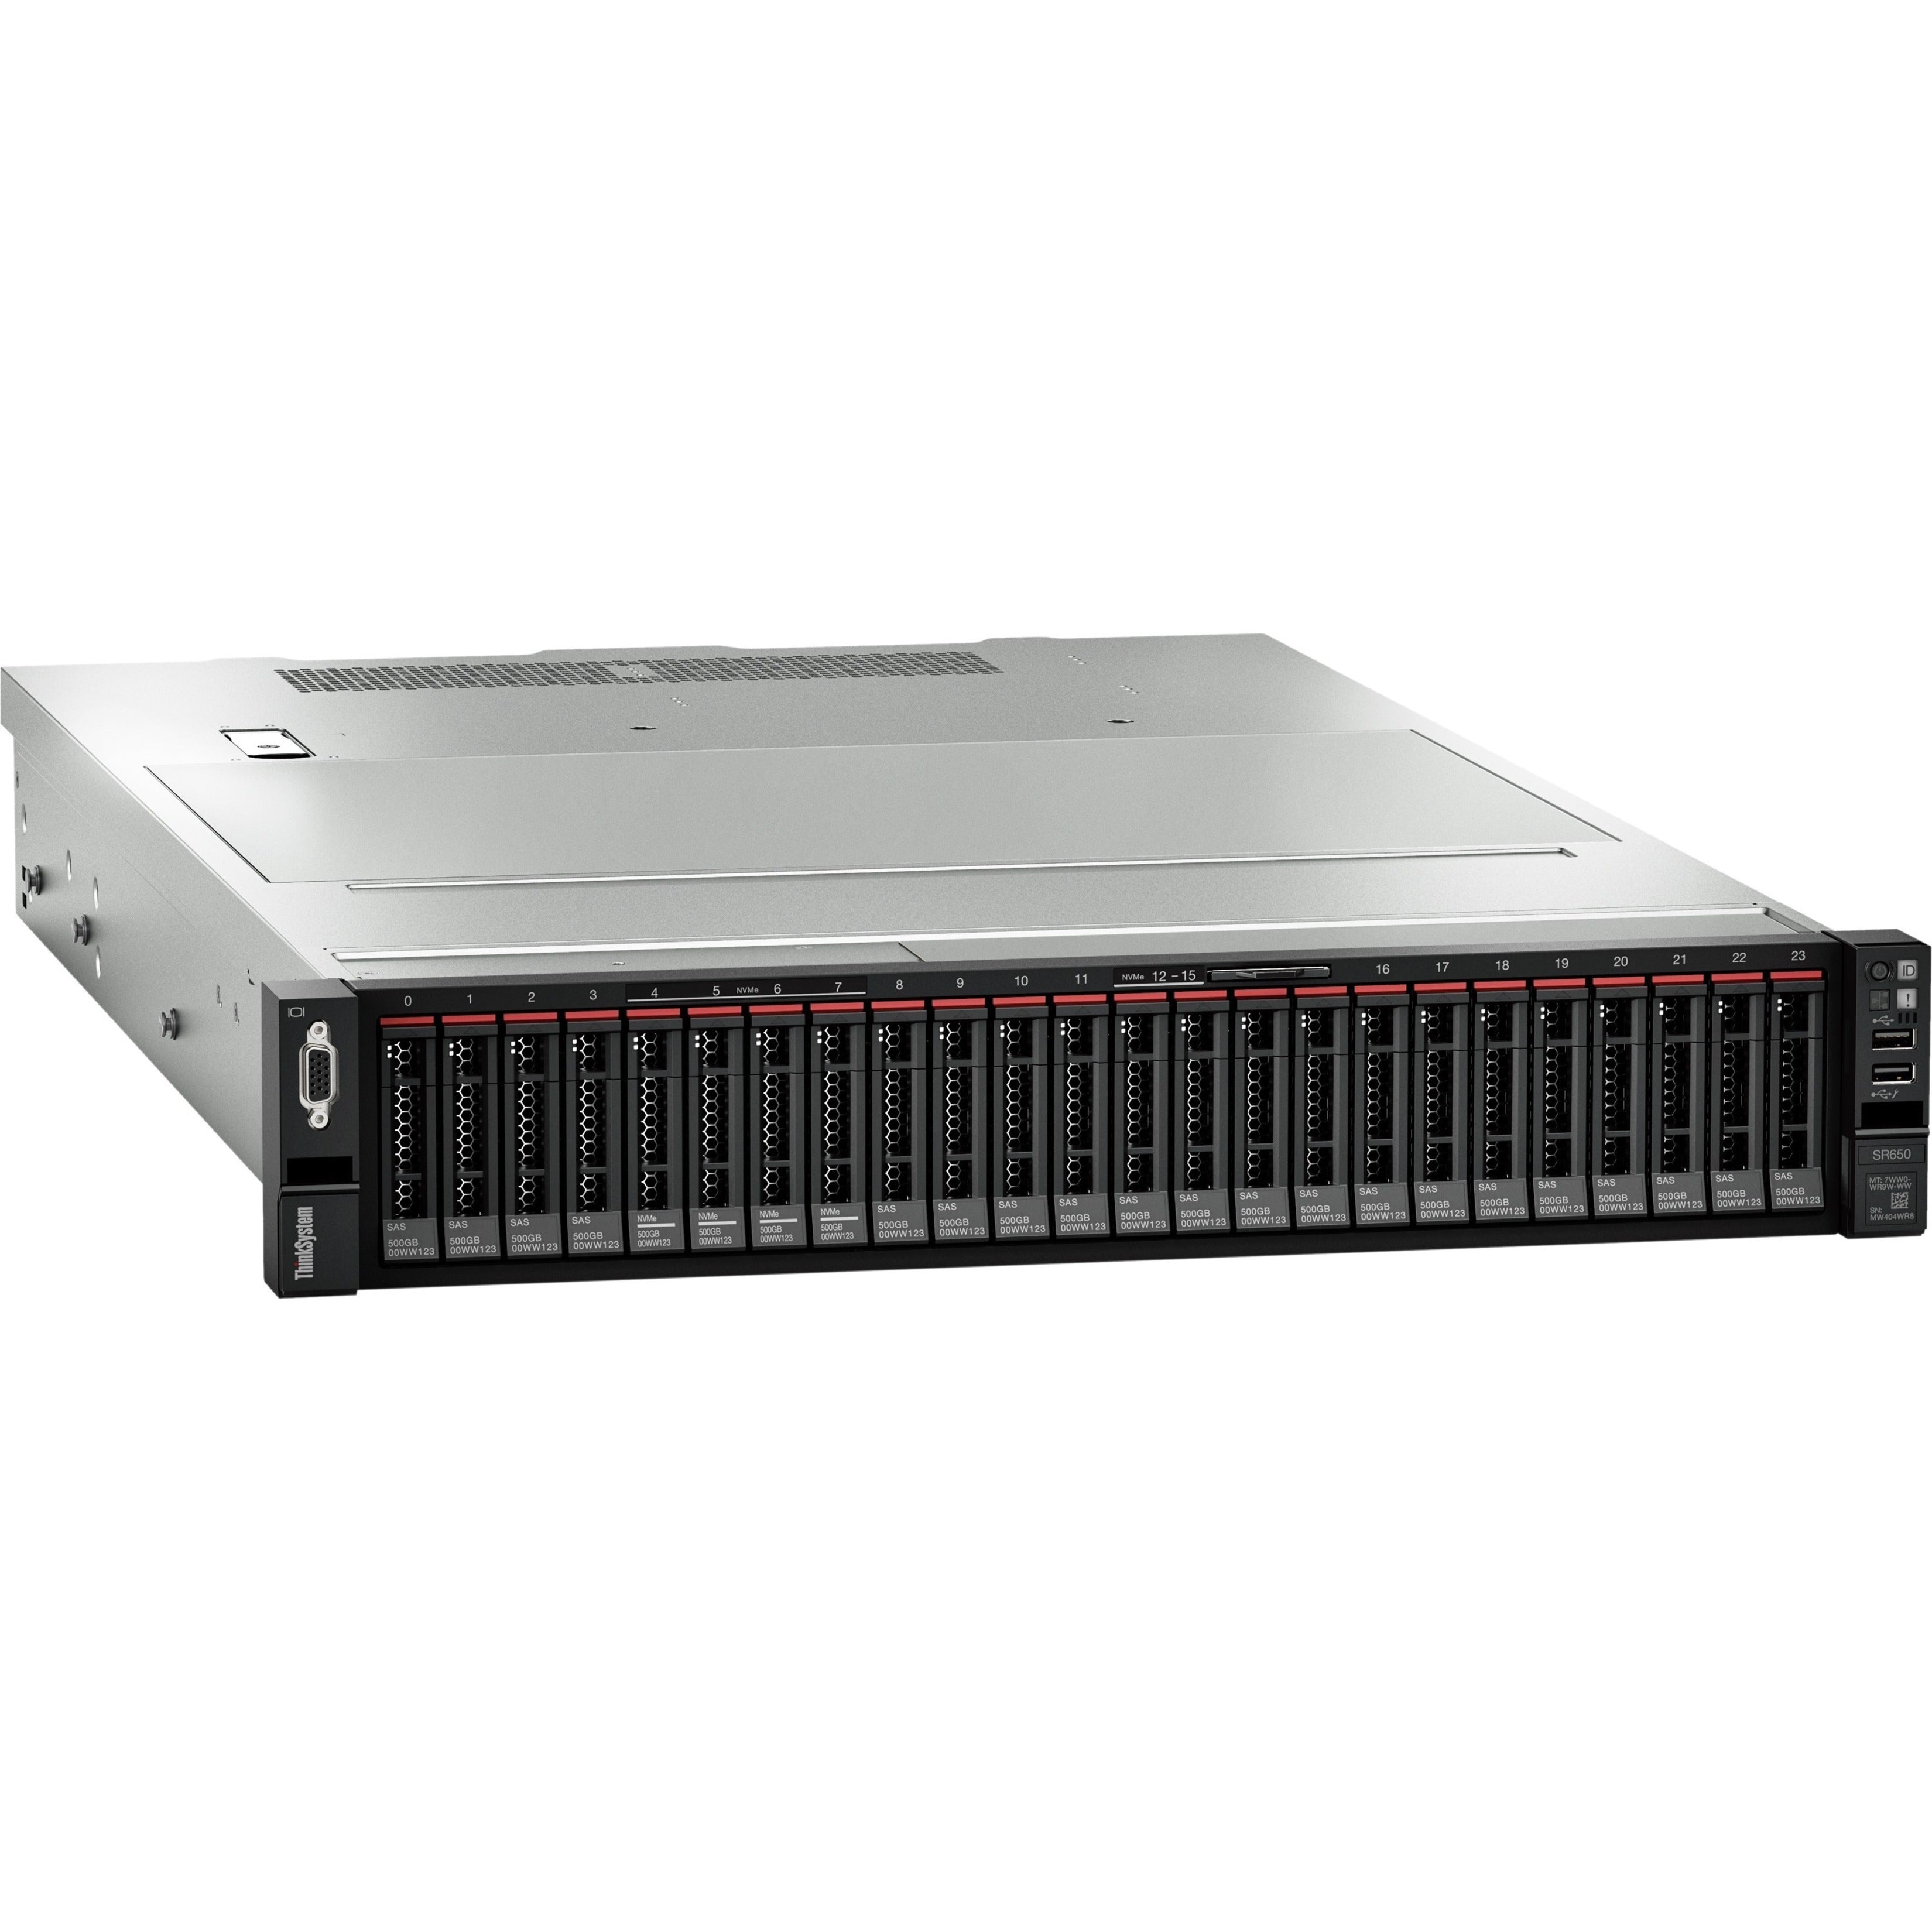 Lenovo 7X06A0FLNA ThinkSystem SR650 Server, Hexadeca-core, 32GB RAM, 3 Year Warranty